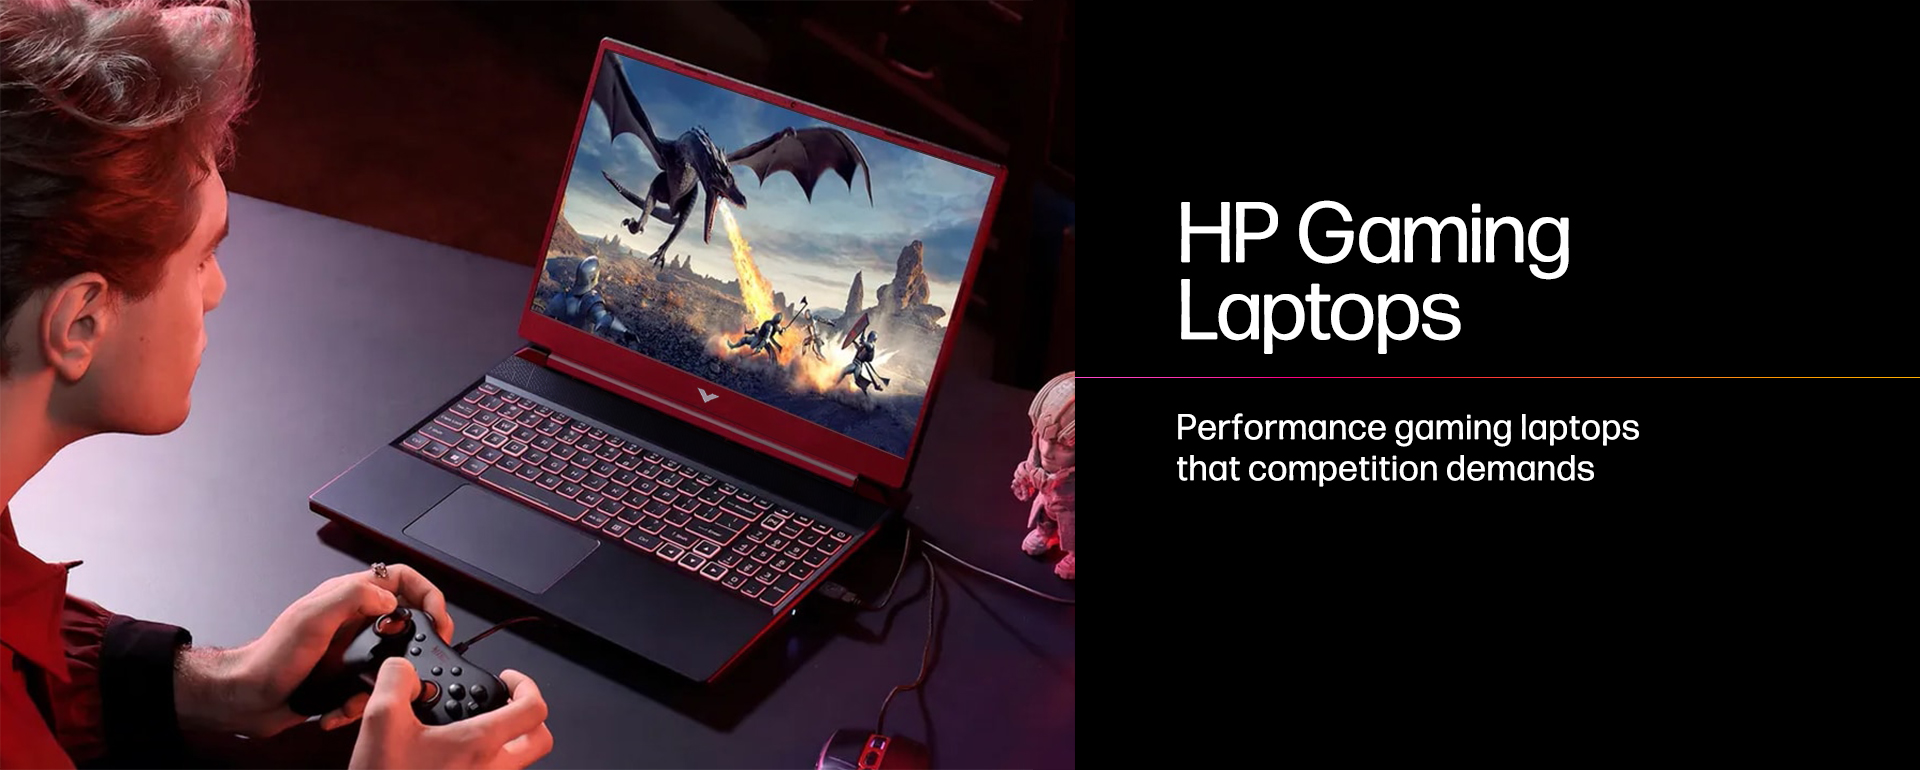 HP Gaminglaptops 05.23.banner